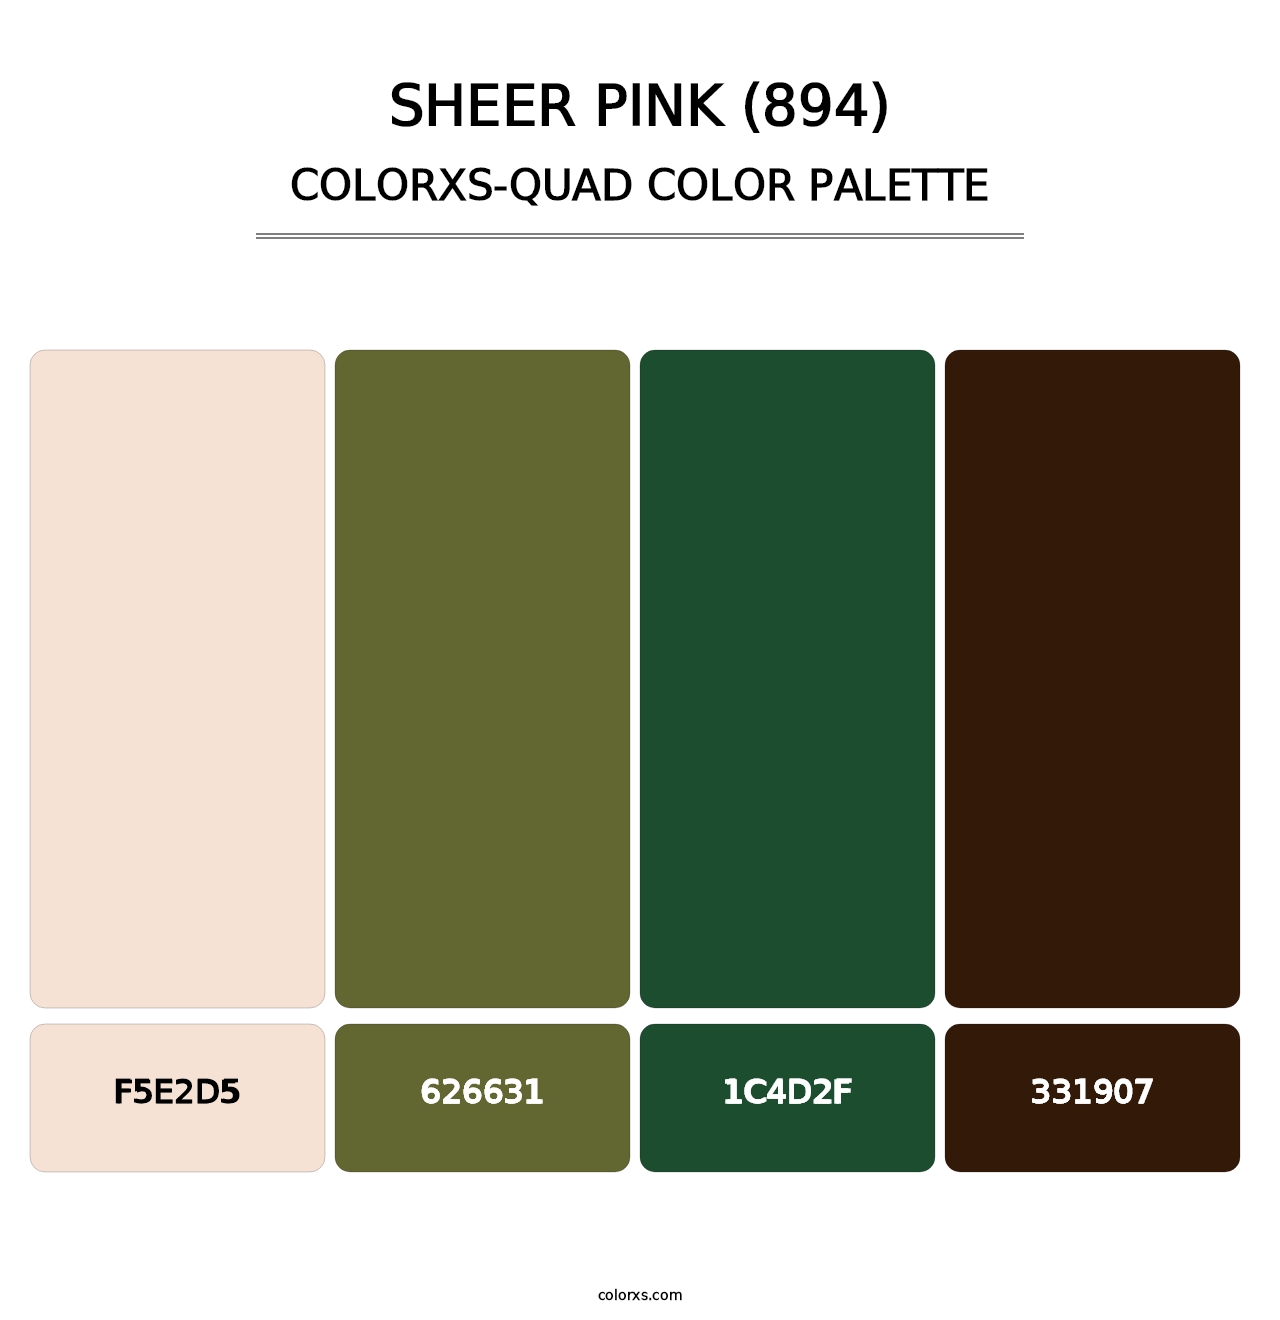 Sheer Pink (894) - Colorxs Quad Palette